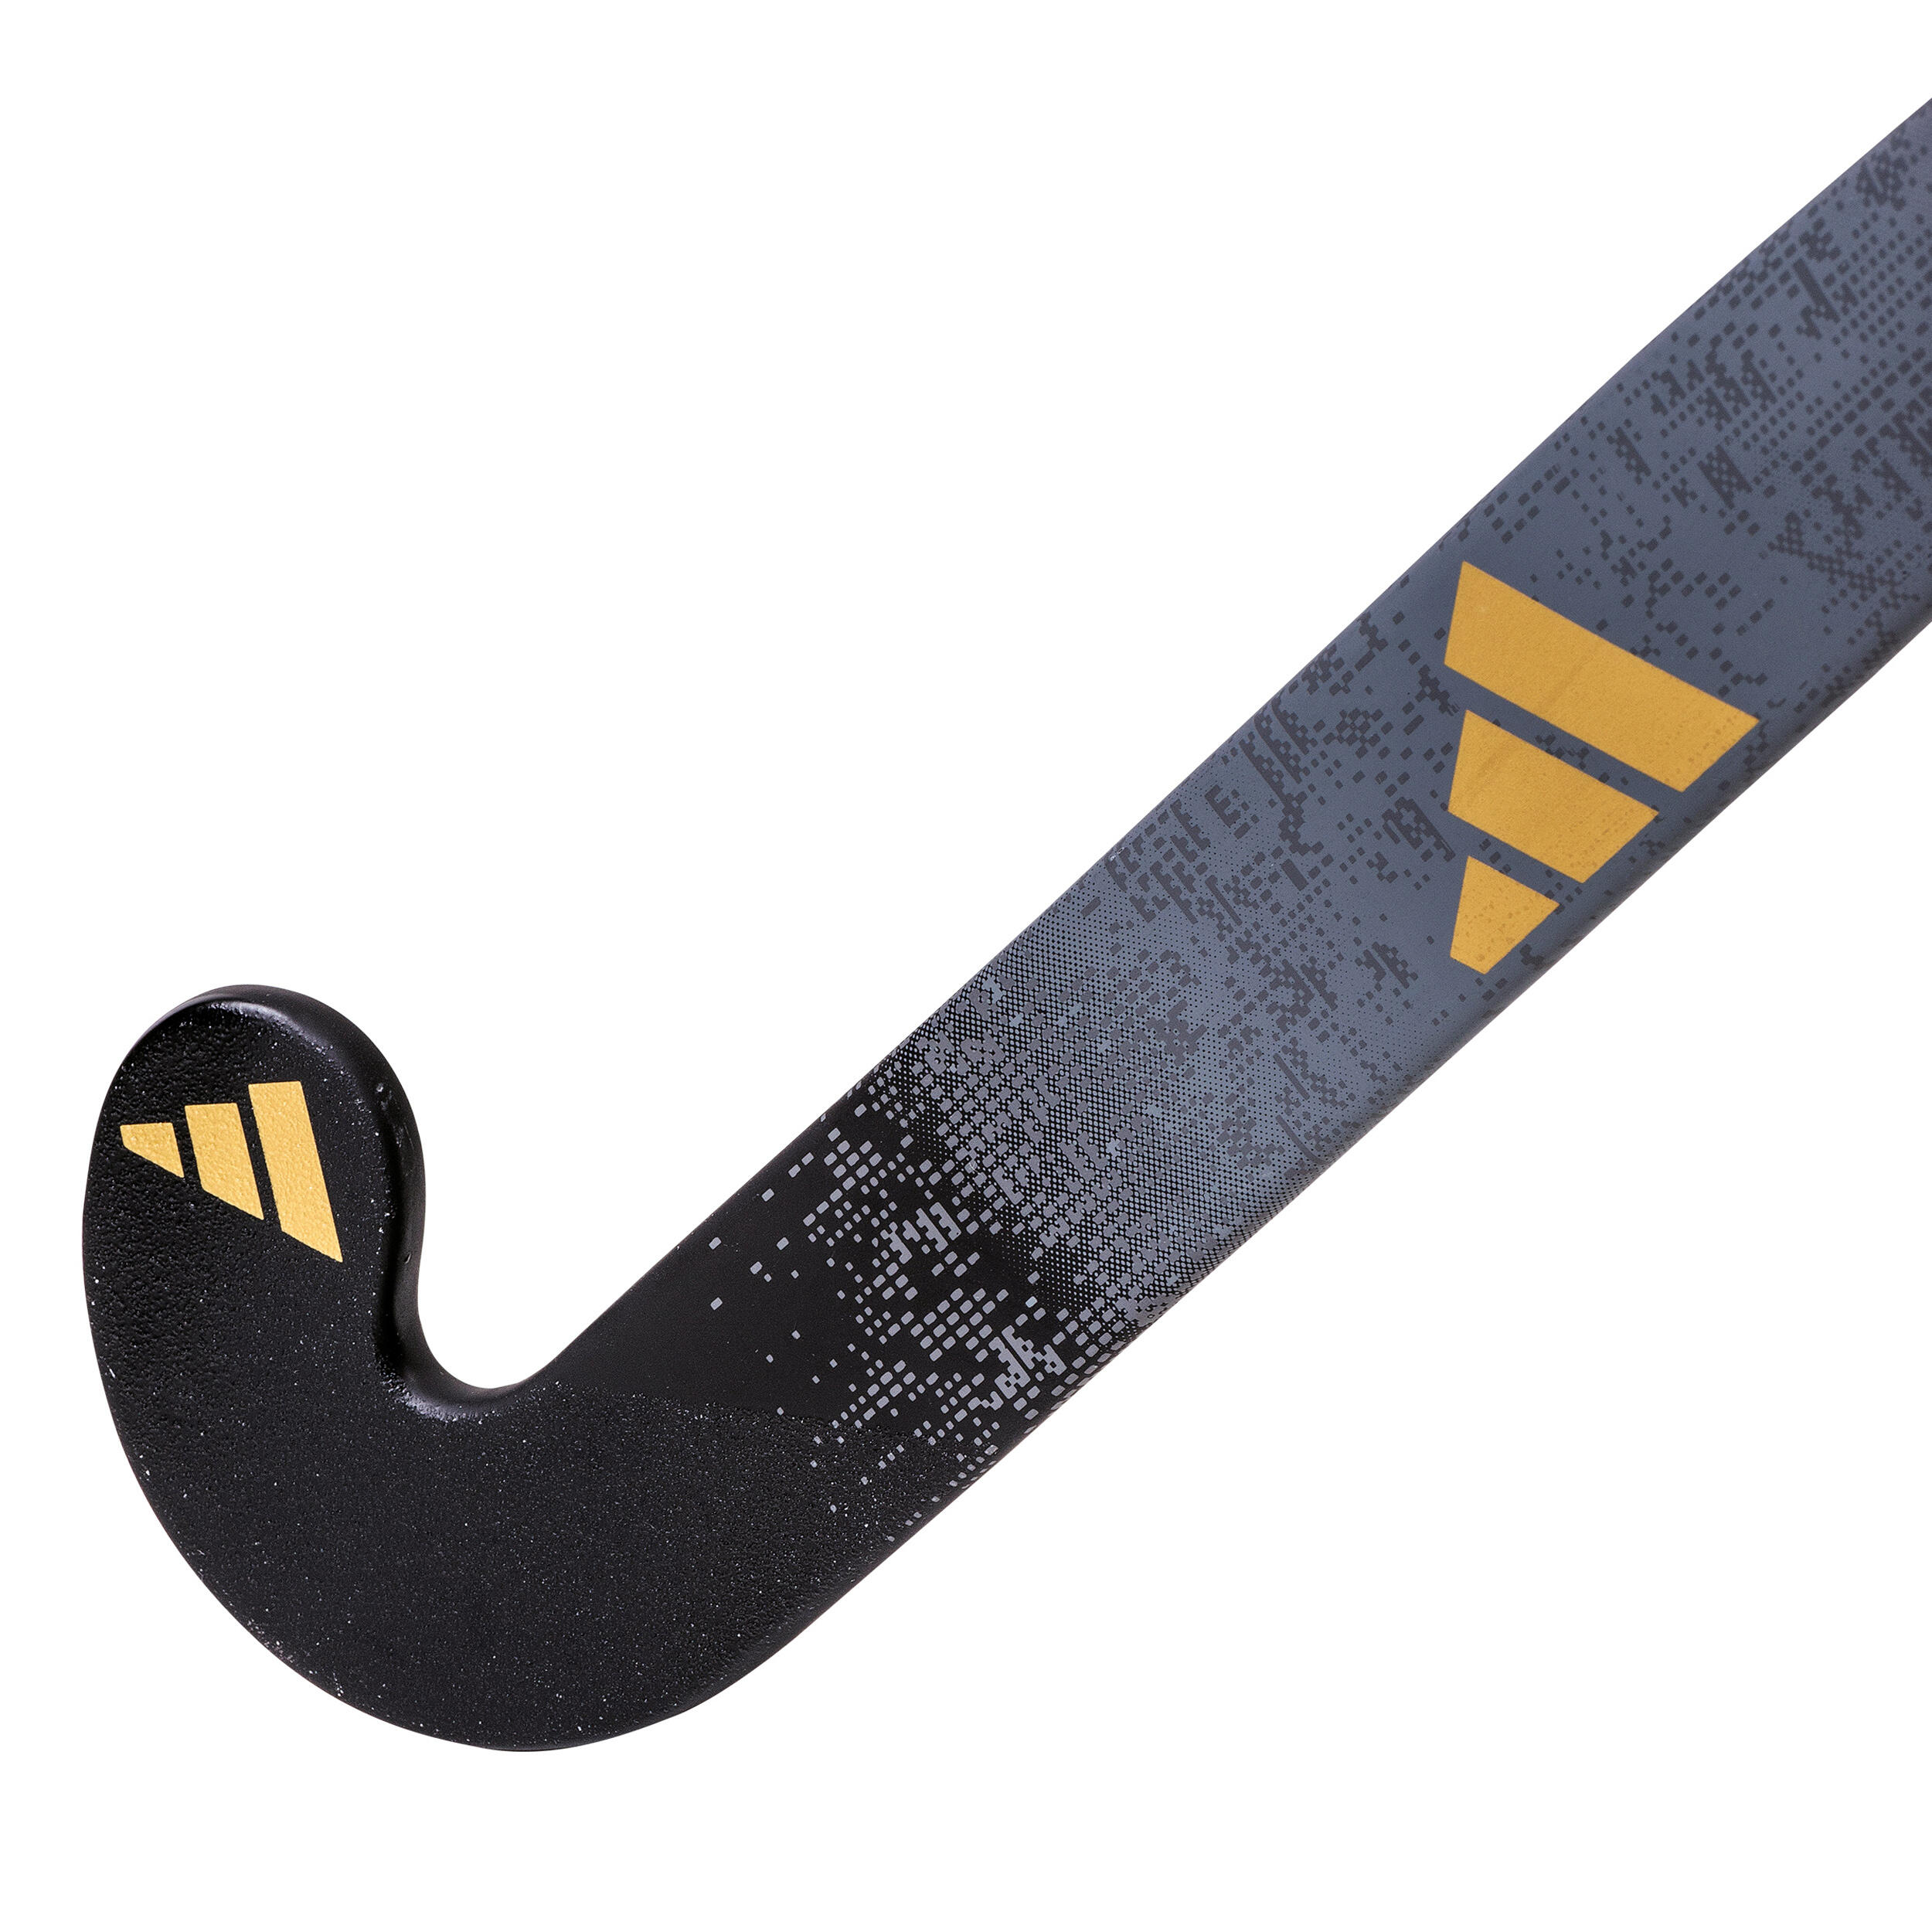 Adult Intermediate 20% Carbon Mid Bow Field Hockey Stick Estro .7 - Black/GoldBlack and gold 2/13